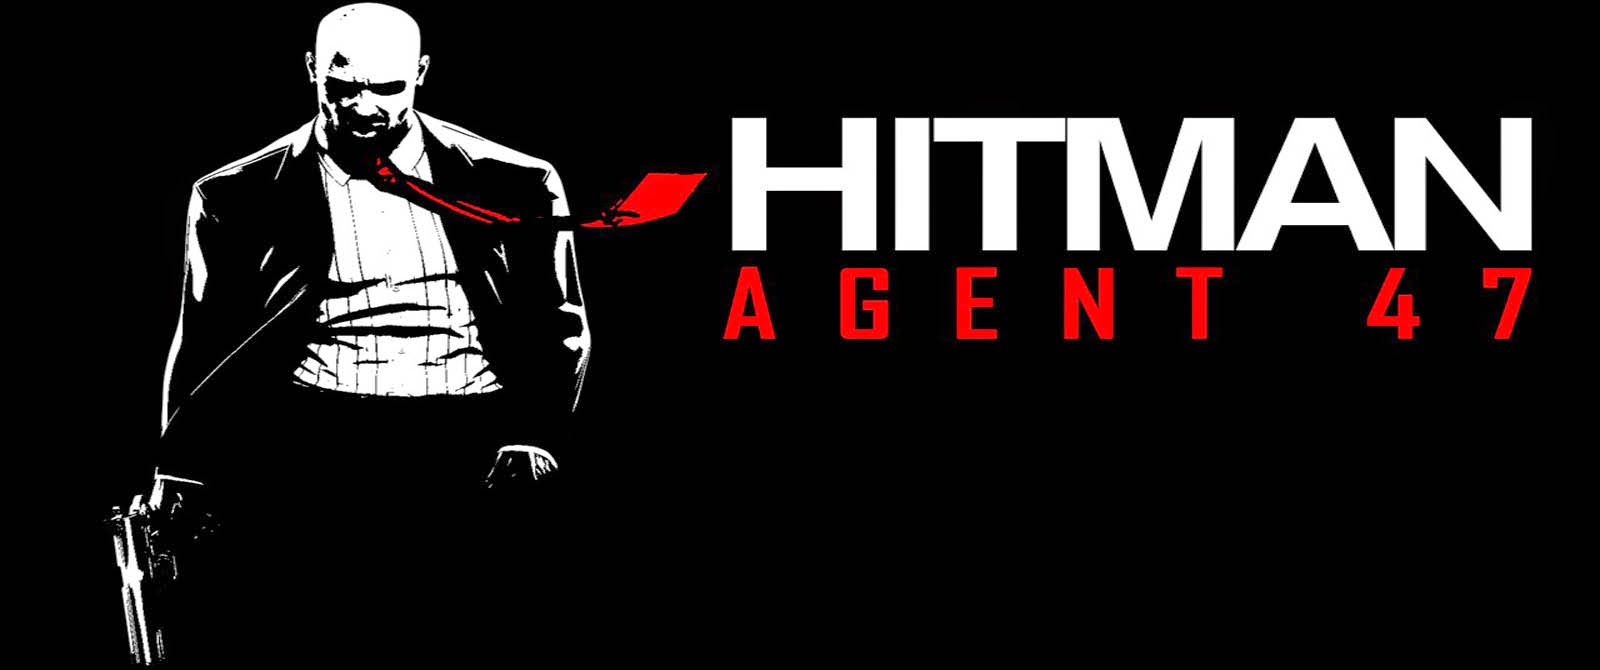 Download Hitman: Agent 47 Full Movie Free HD